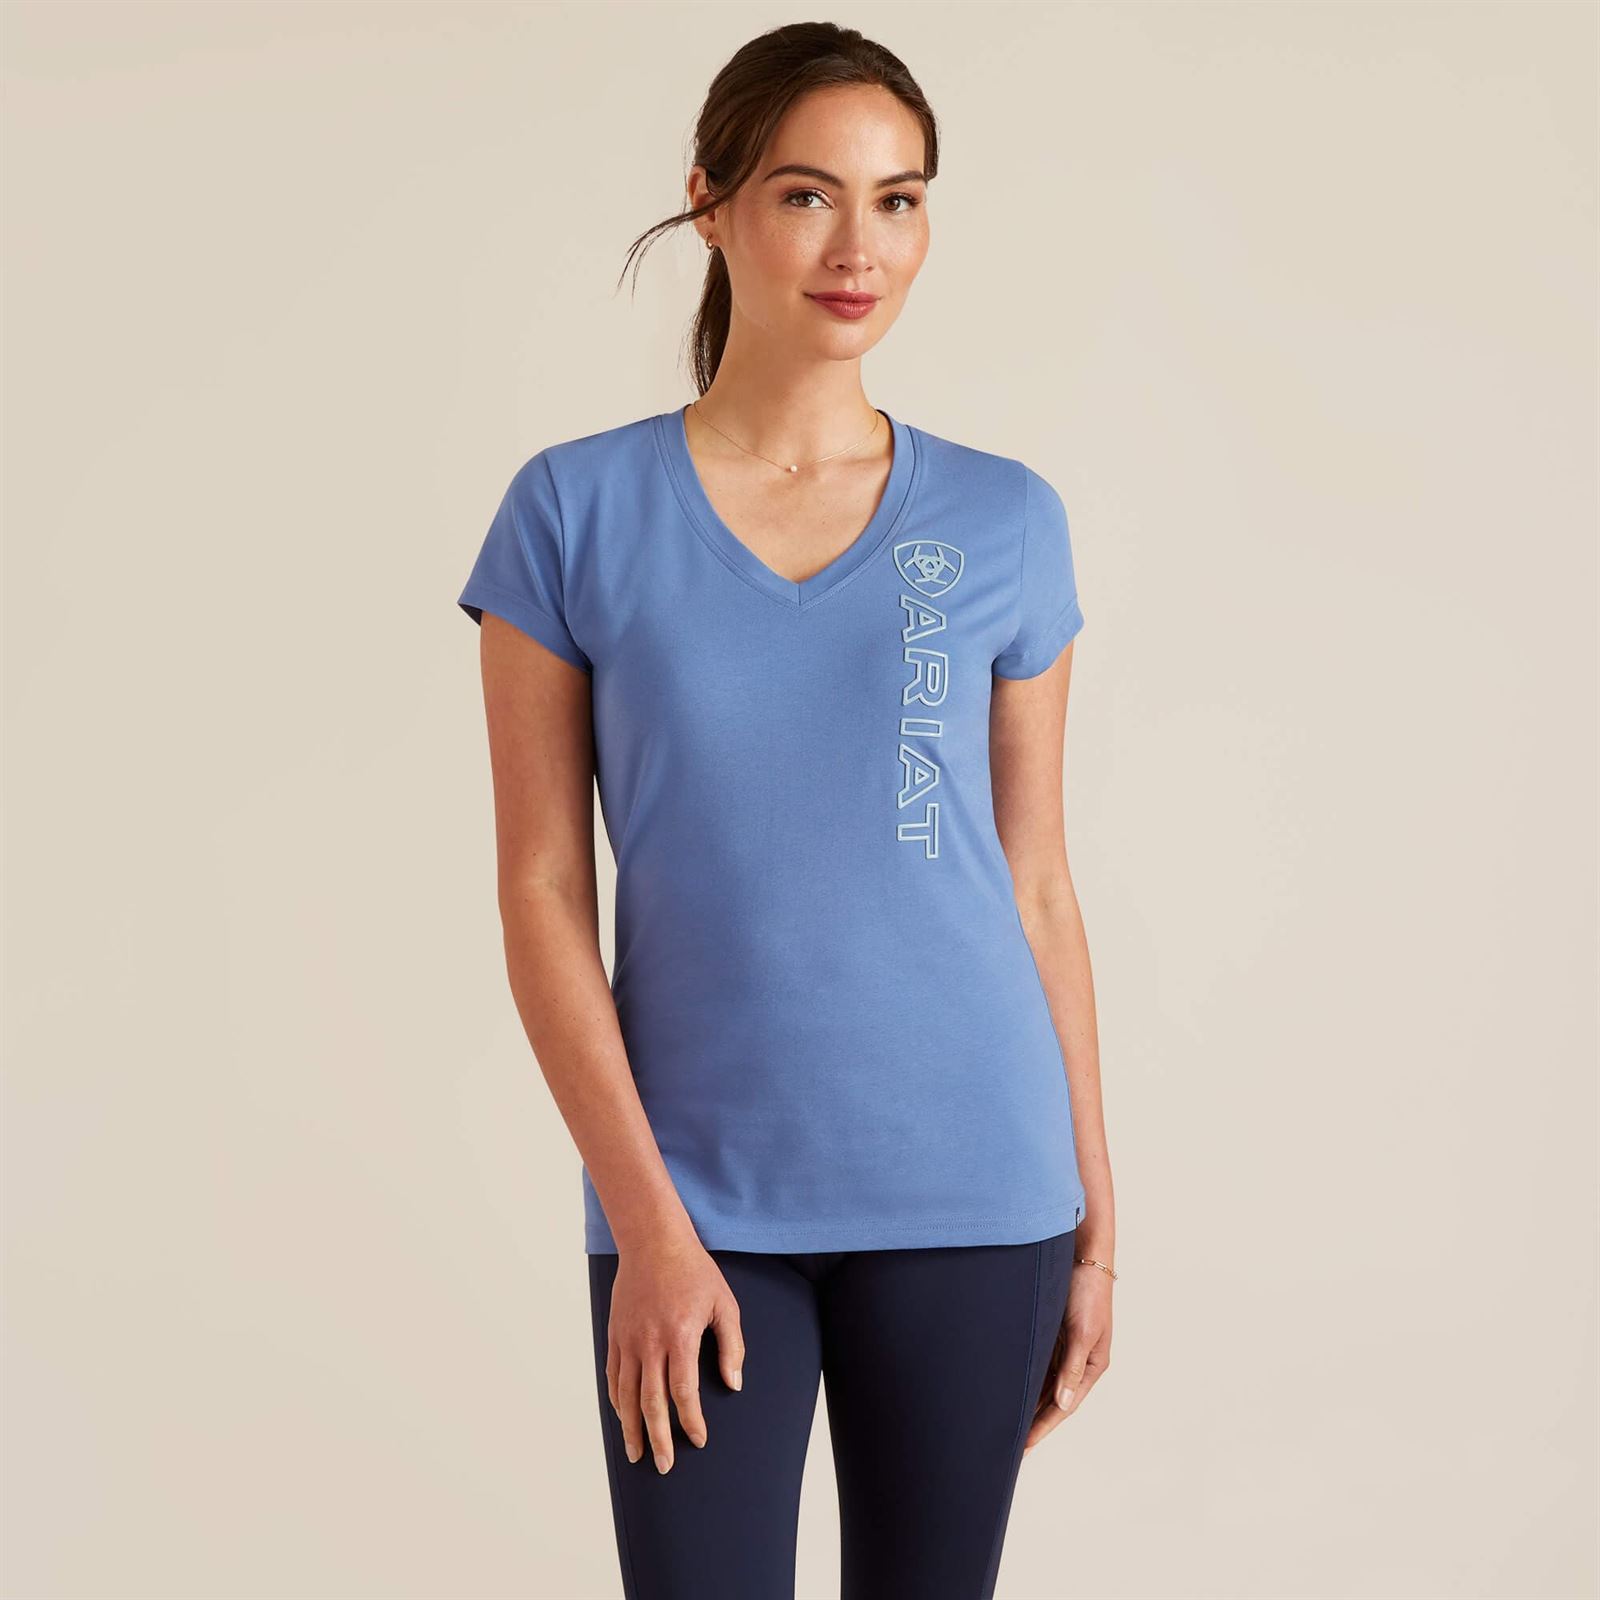 Camiseta ARIAT mujer azul logo vertical - Imagen 3